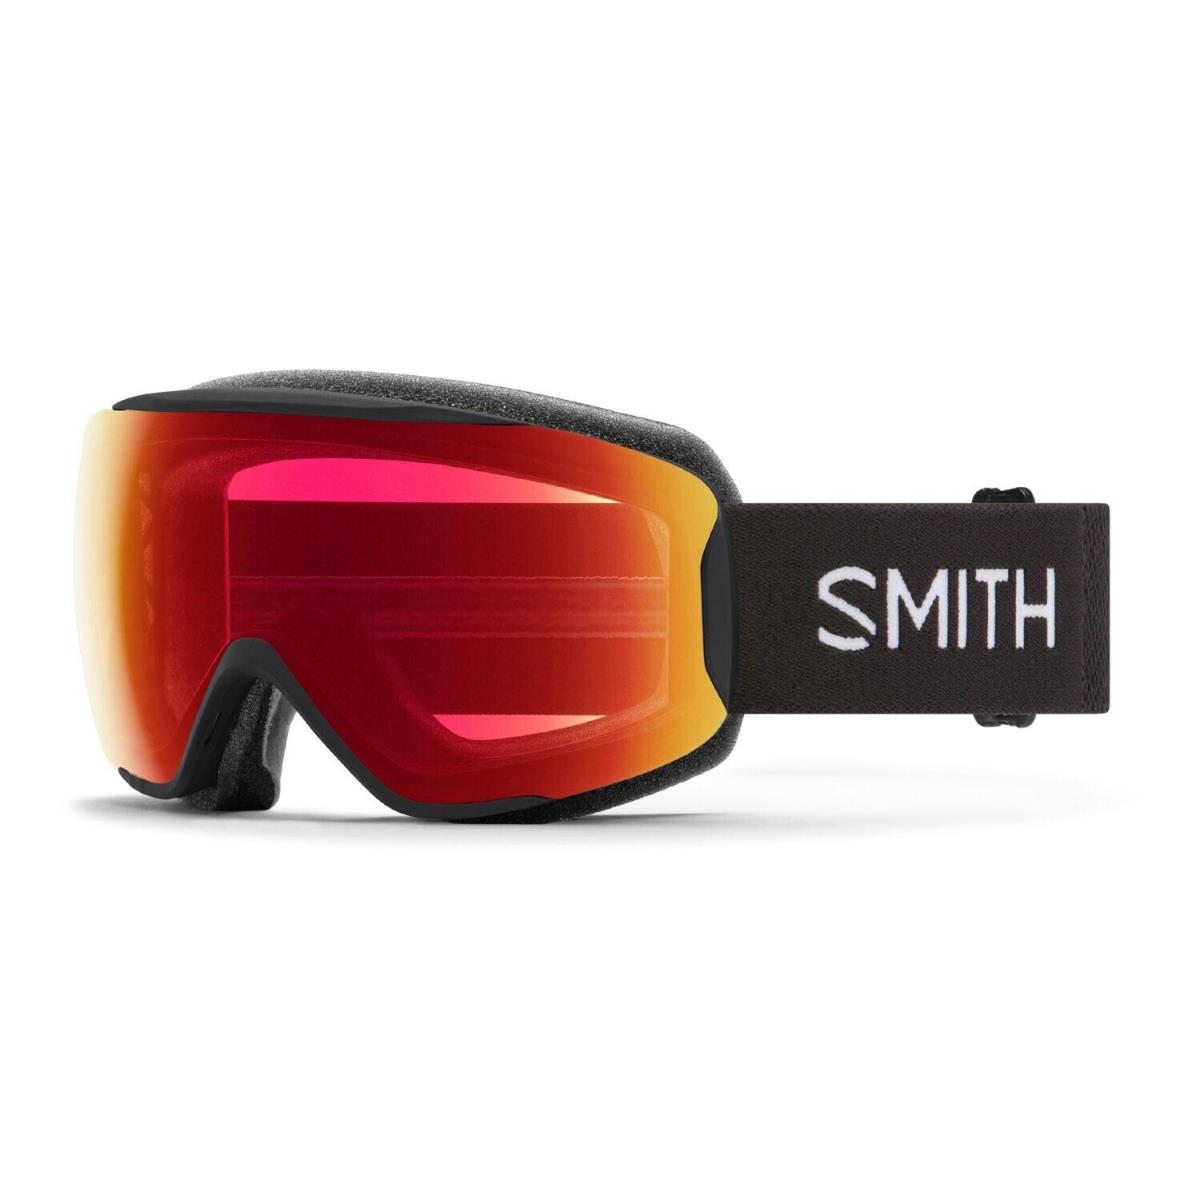 Smith Moment Snow Goggles Black Frame Photochromic Red Mirror Lens - Frame: Black